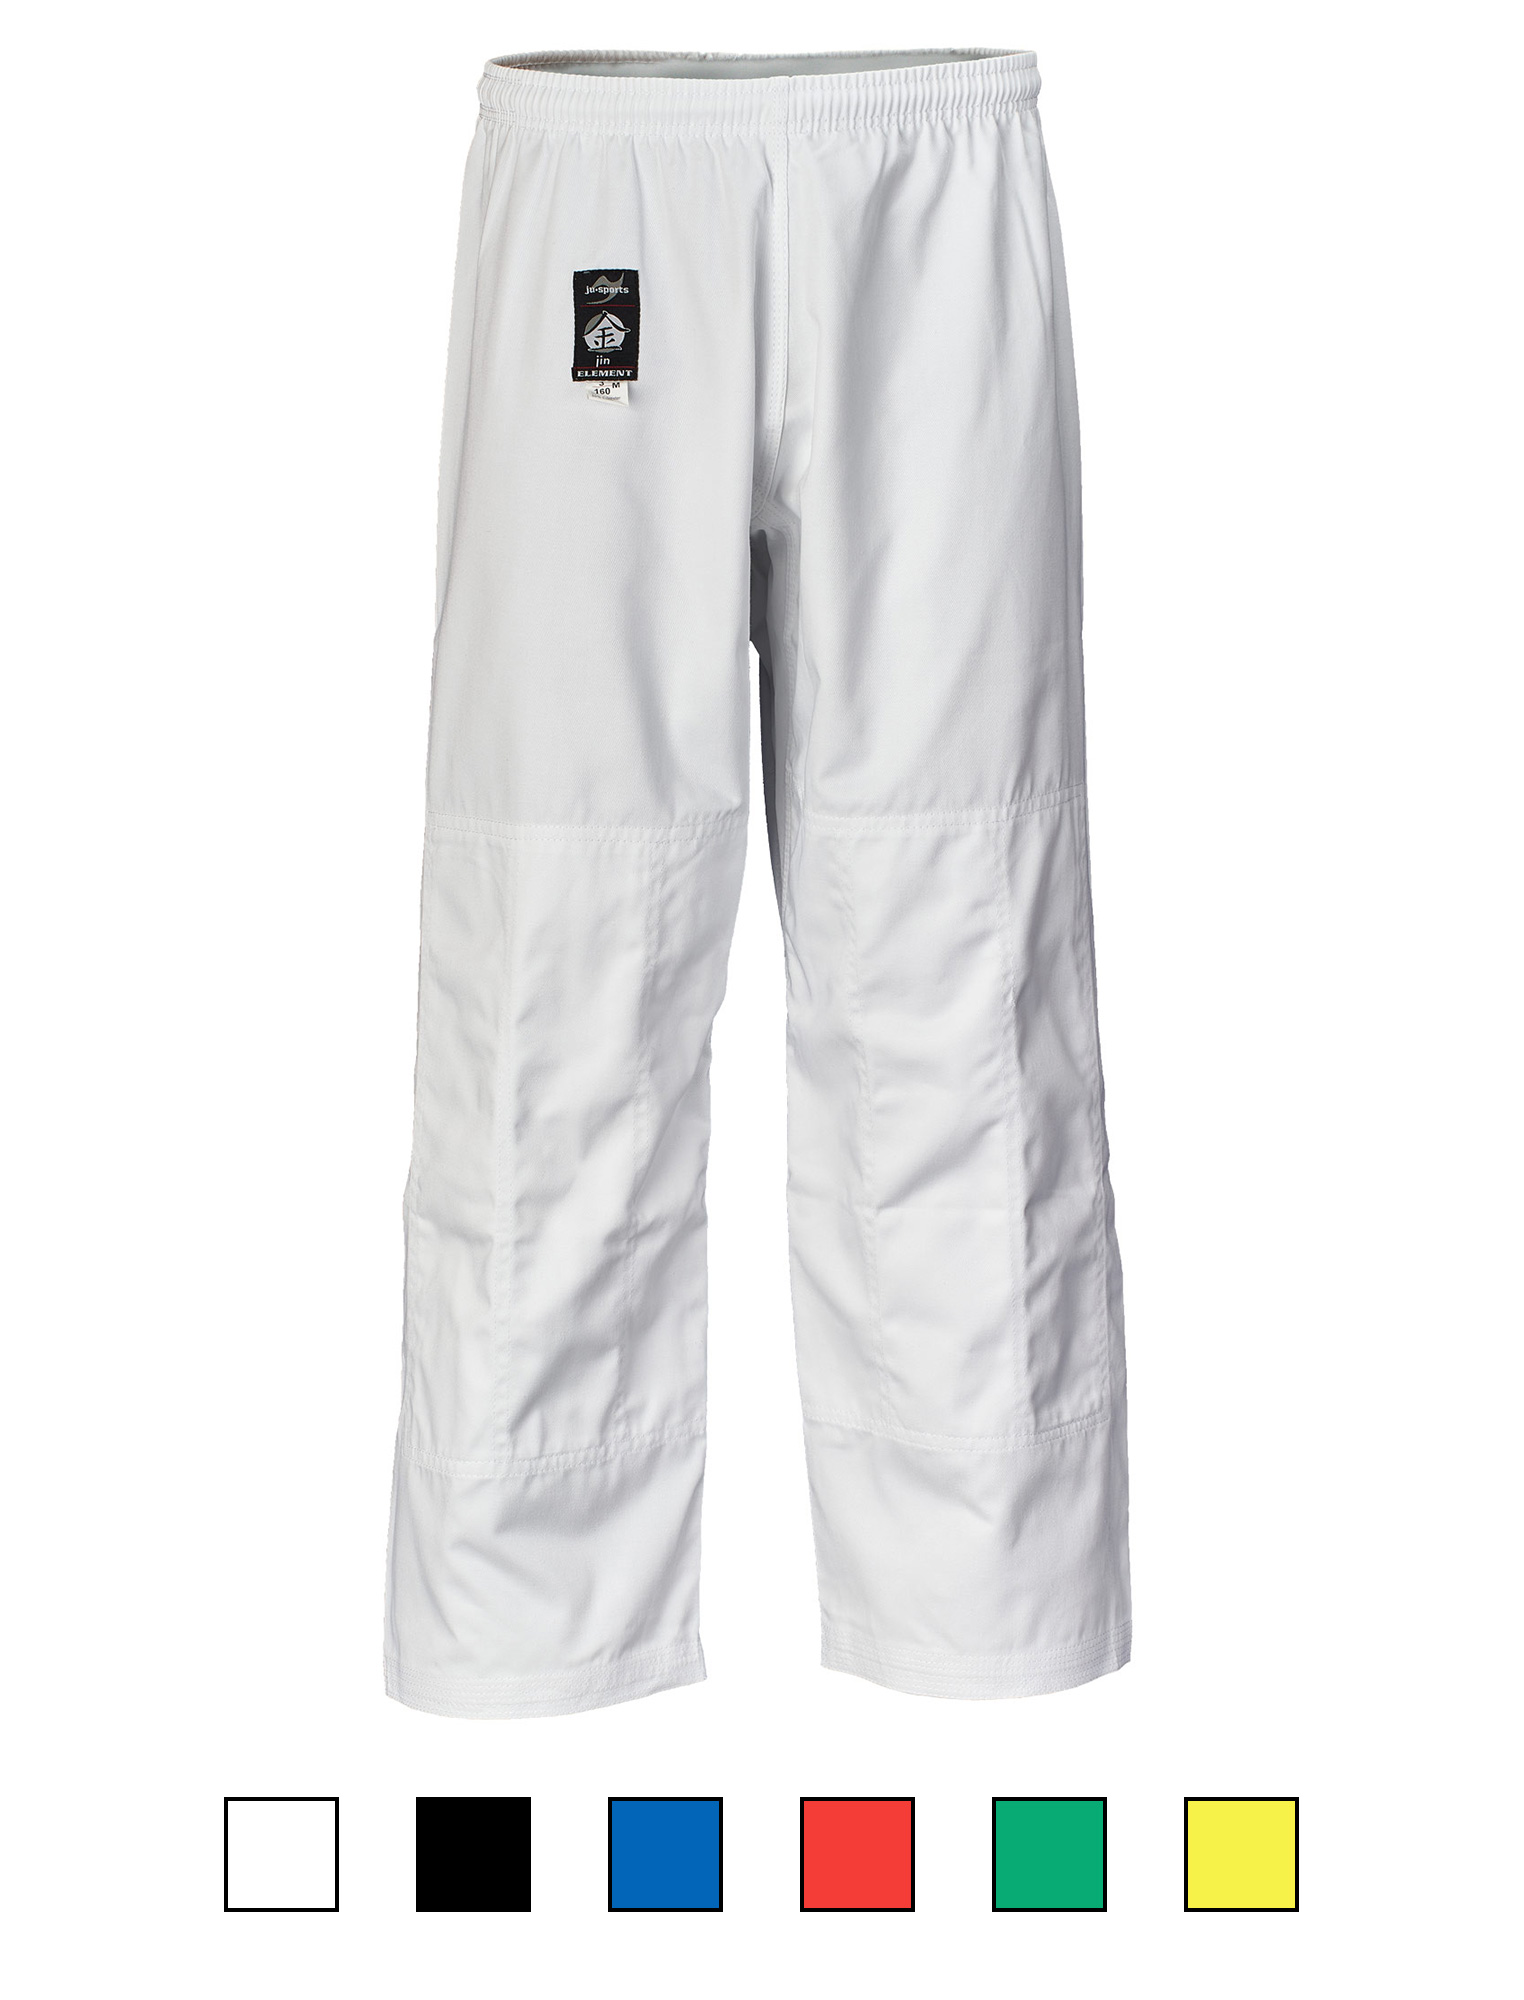 Element Pants white regular cut